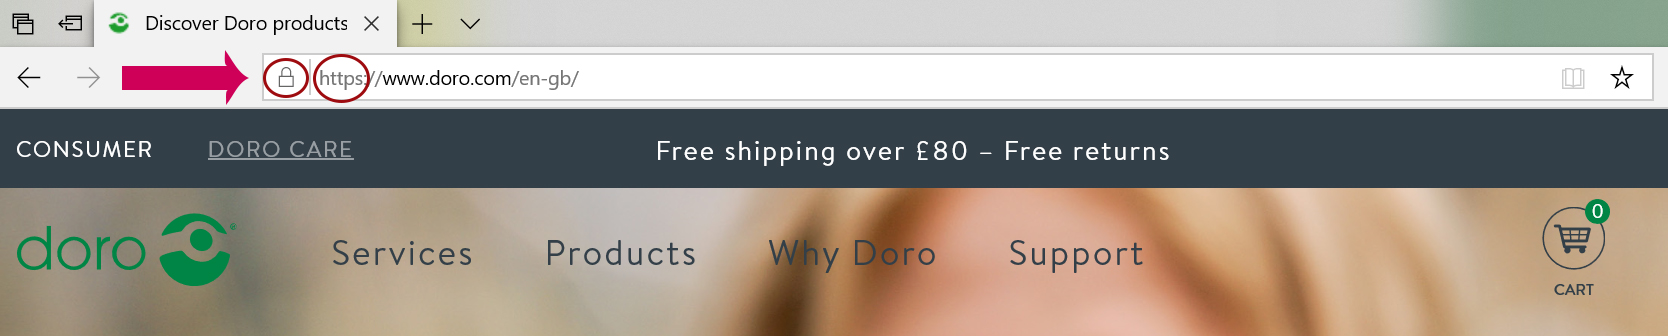 Doro URL - Shopping - all languages.jpg